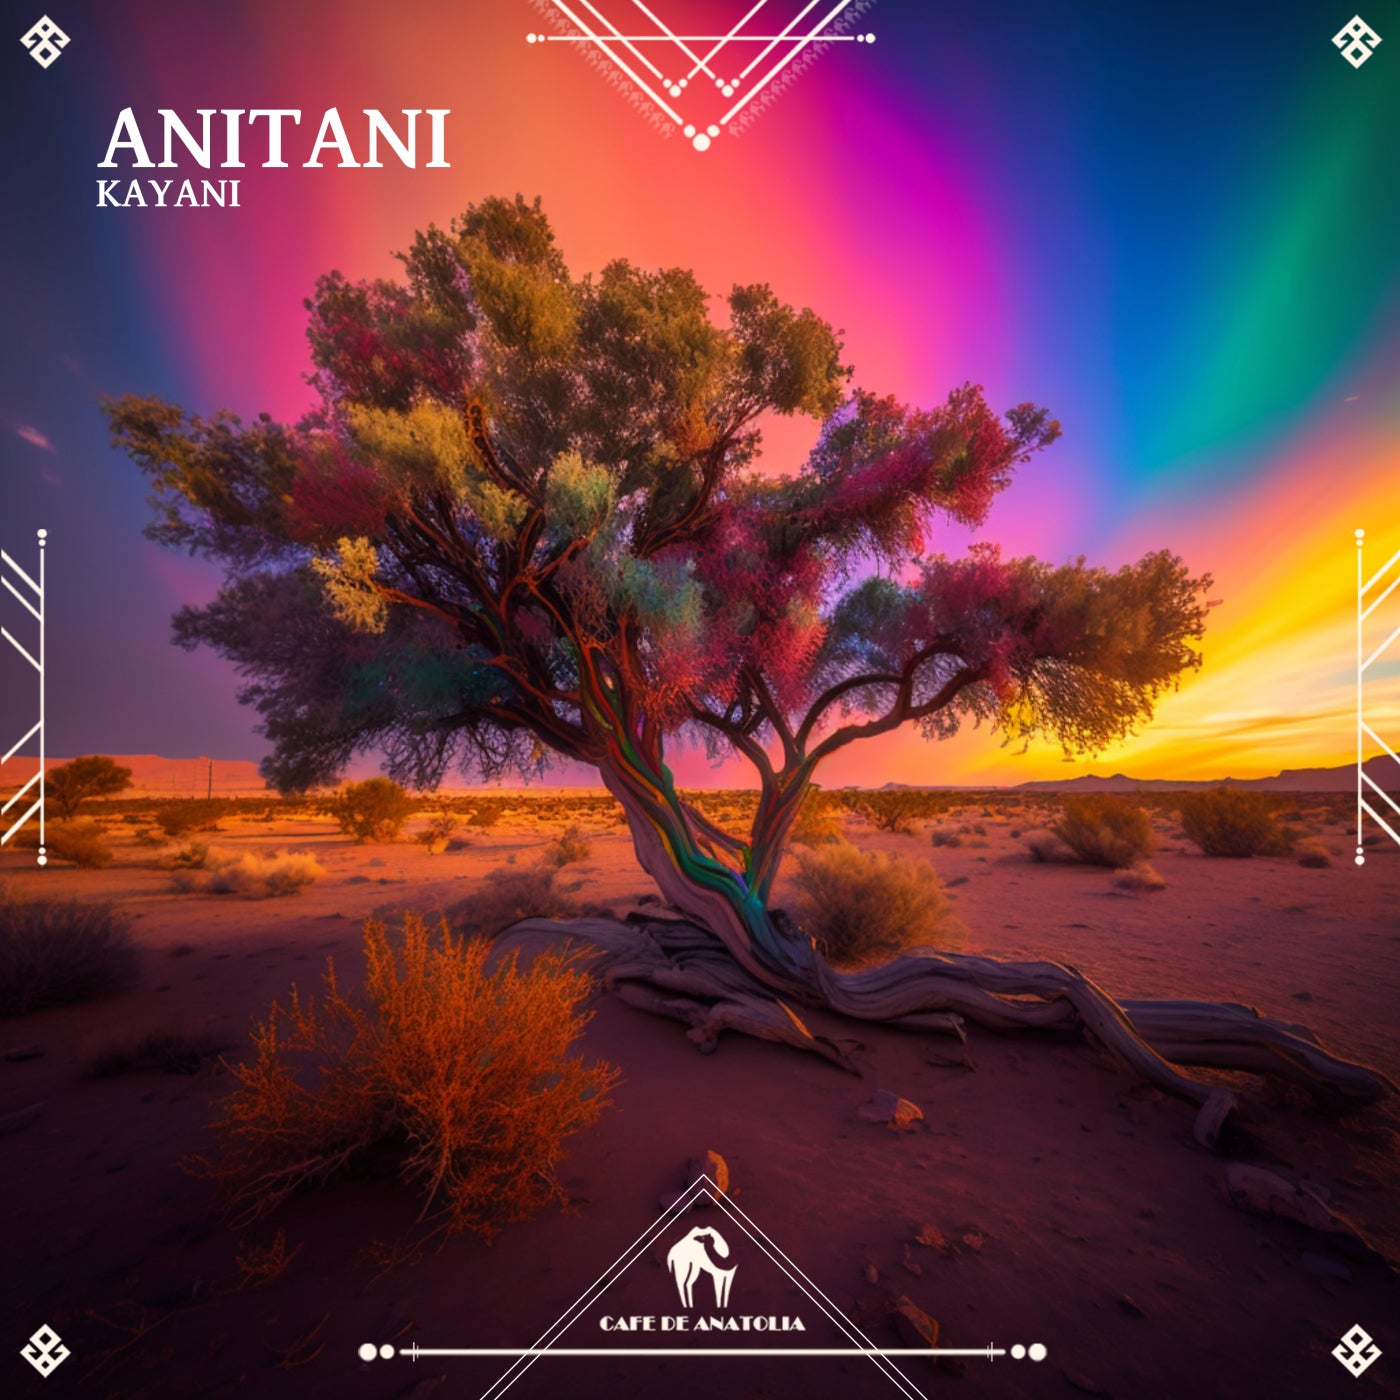 Cover - Cafe De Anatolia, Kayani - Anitani (Original Mix)